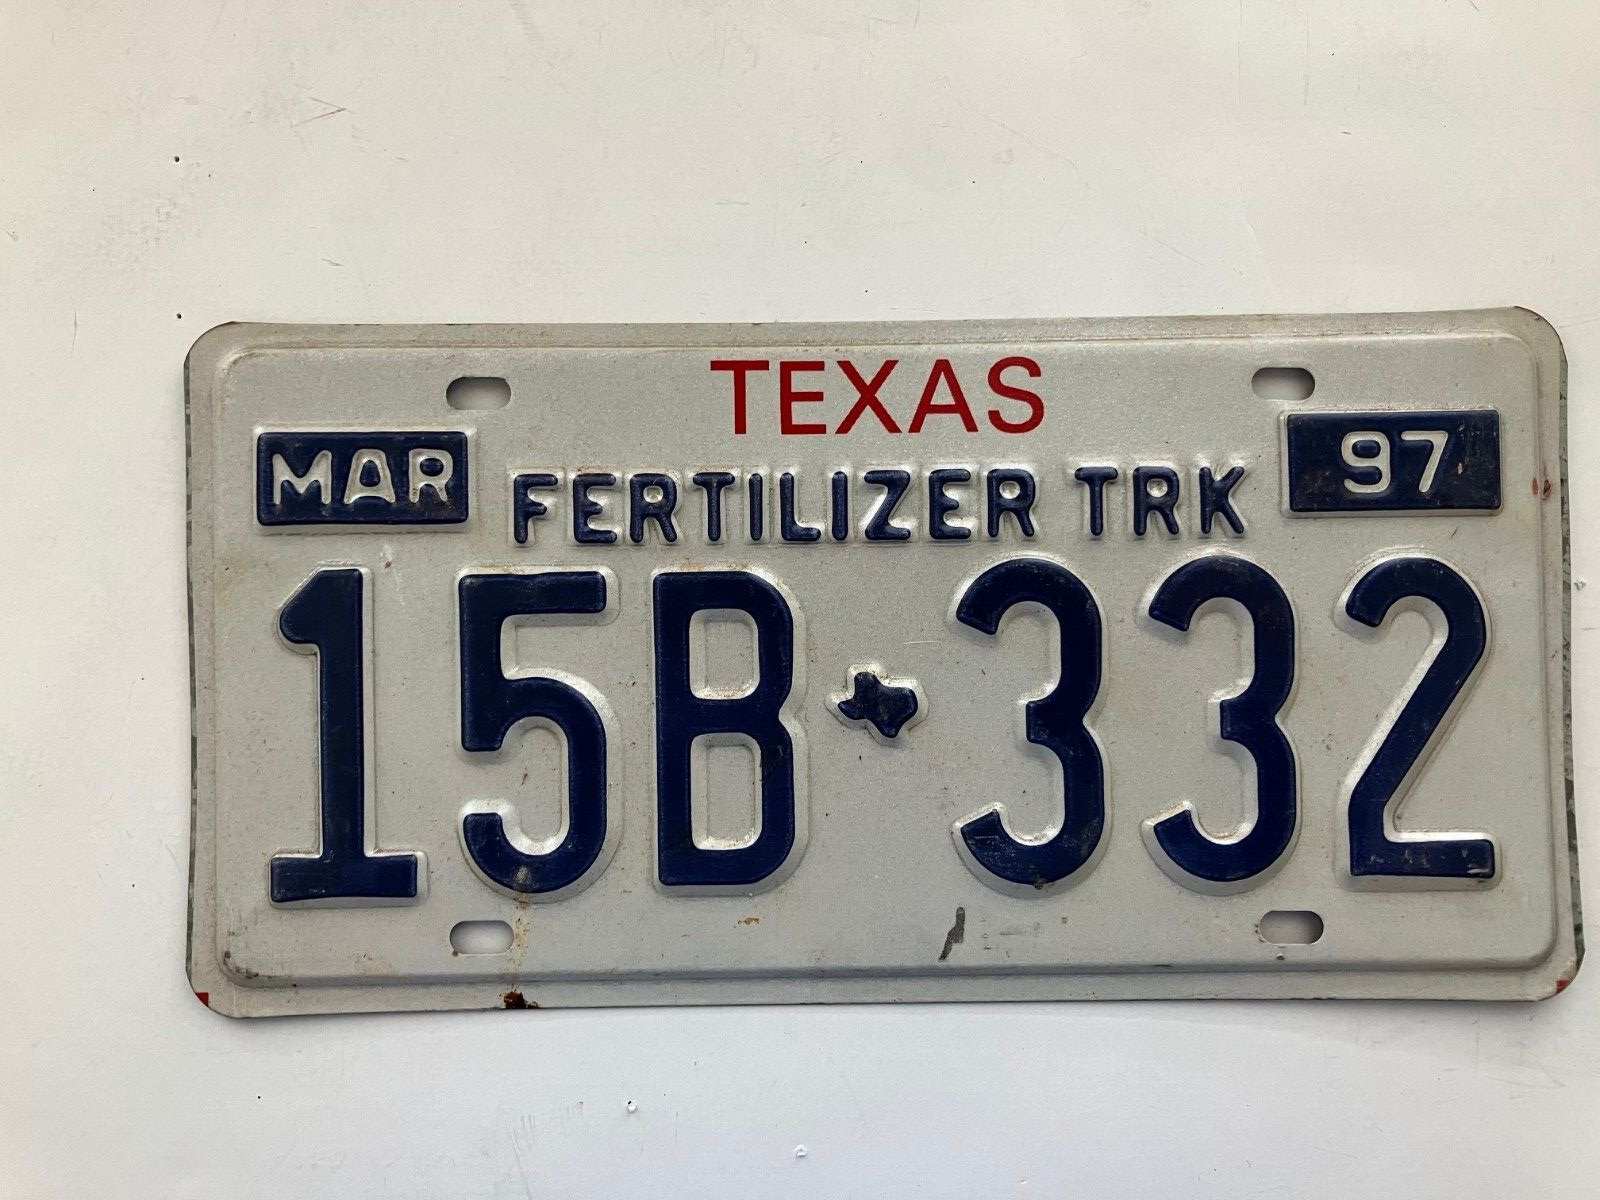  1997 Texas Fertilizer Truck License Plate 15B-332